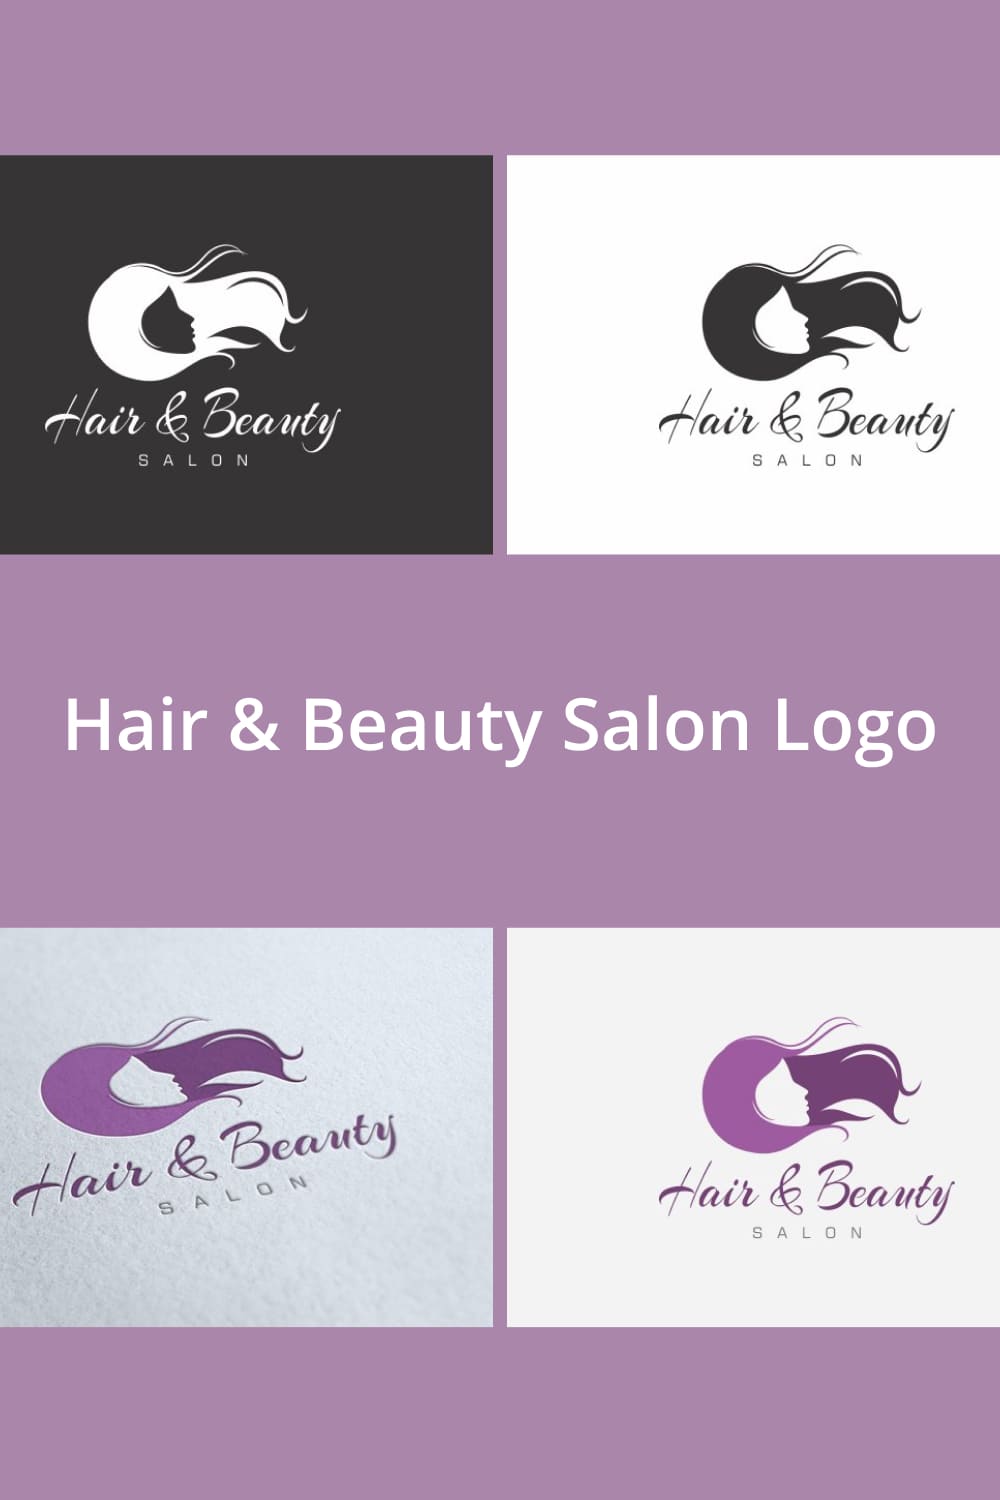 Hair & Beauty Salon Logo - pinterest image preview.